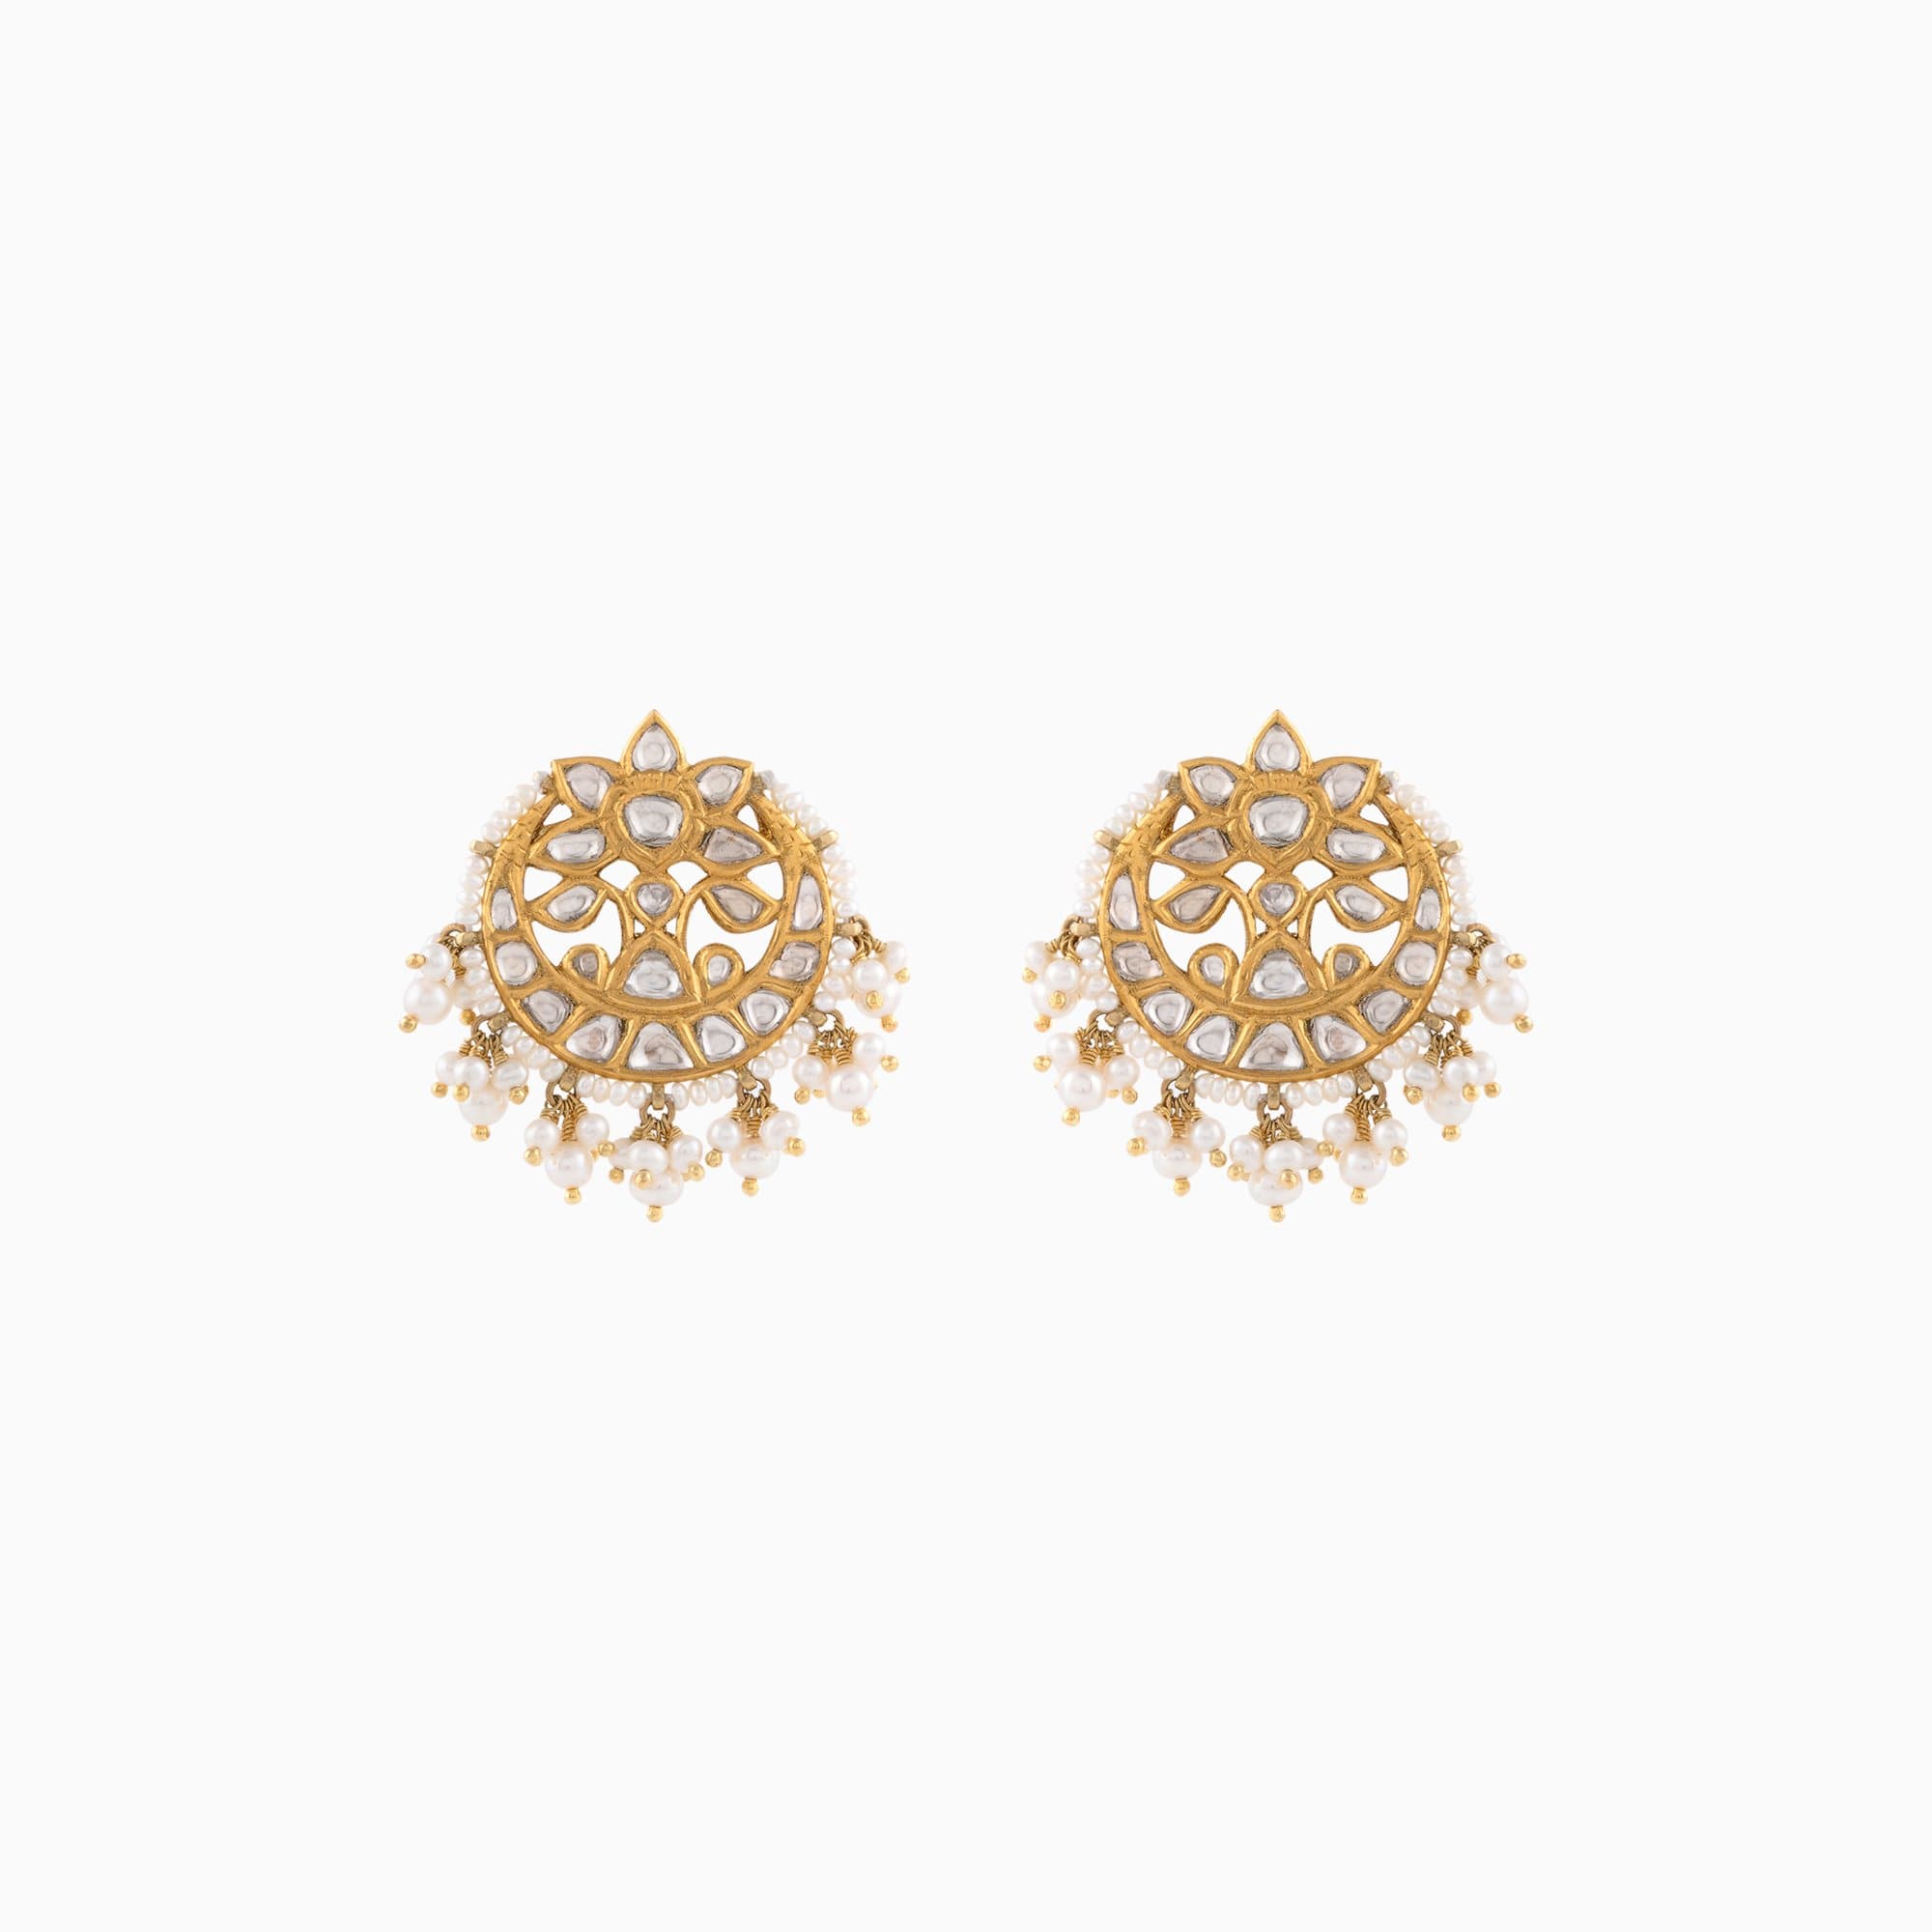 Earring Pair with Polki Diamond and Pearls- KME1862